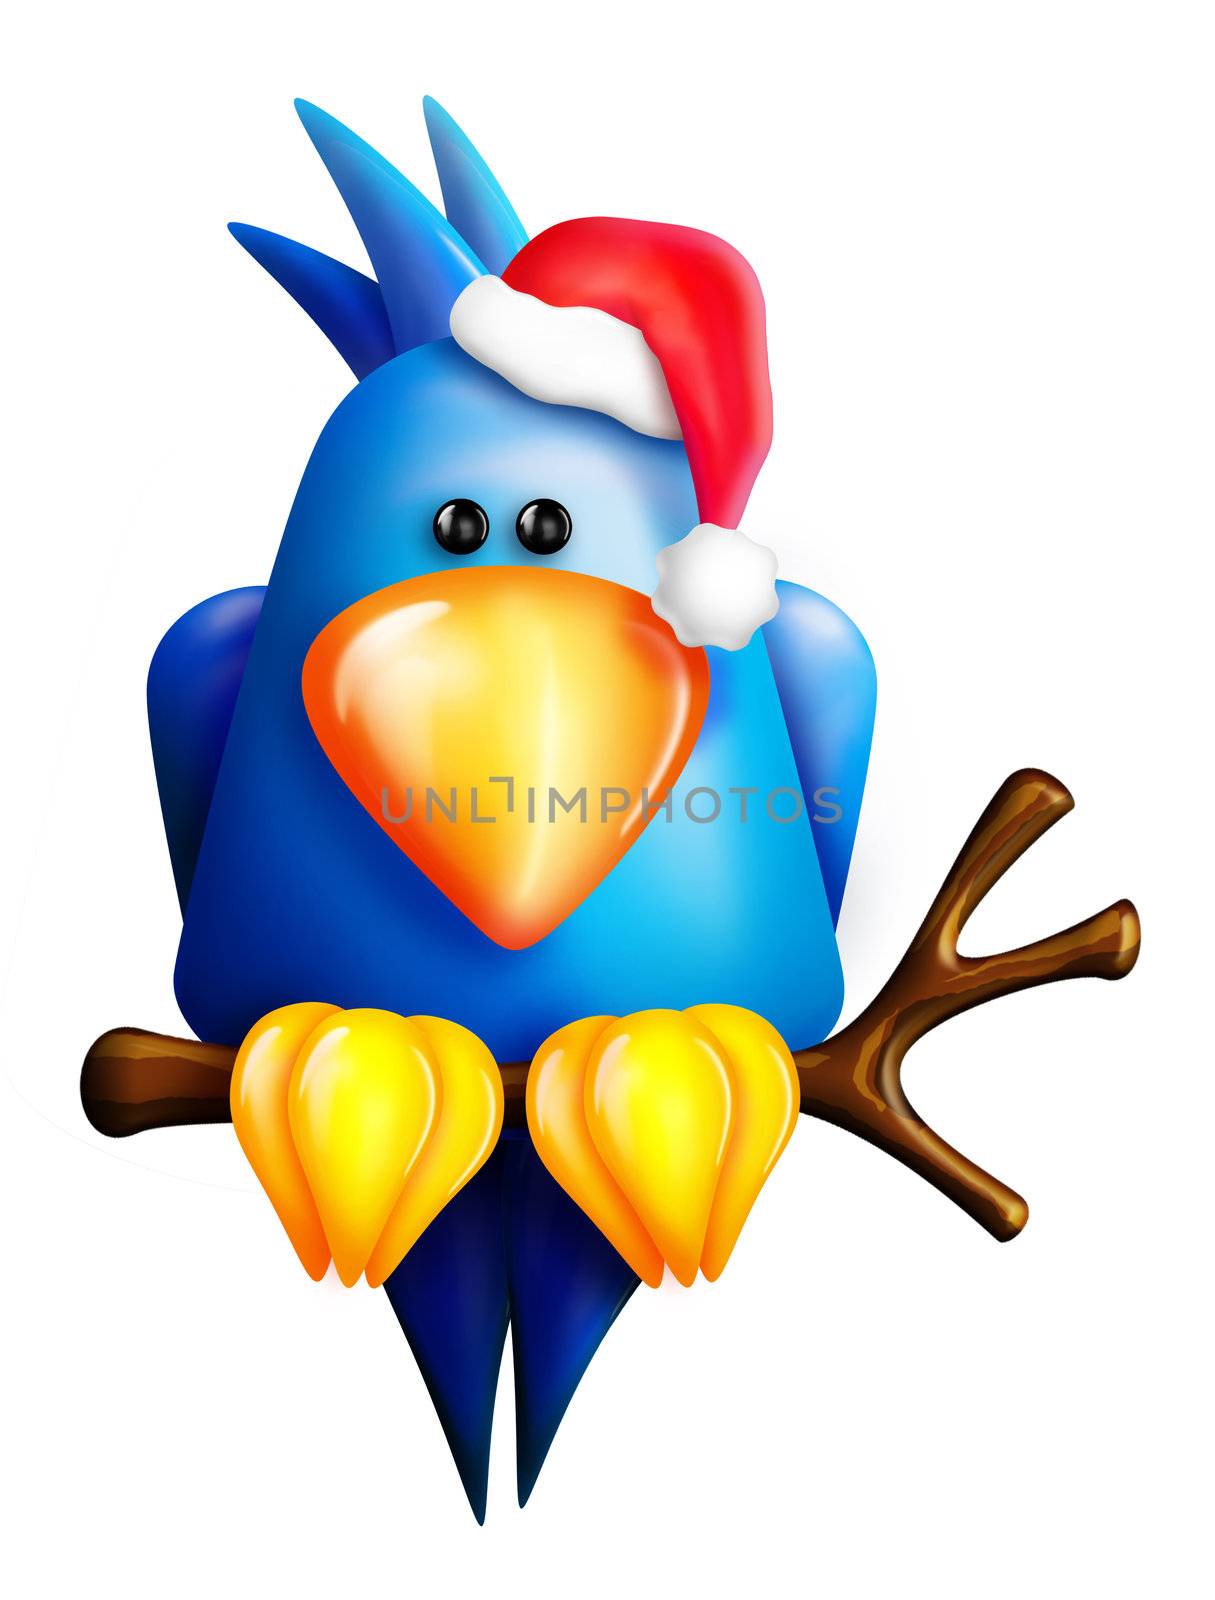 Cartoon Christmas Blue Bird in Santa Hat by komodoempire